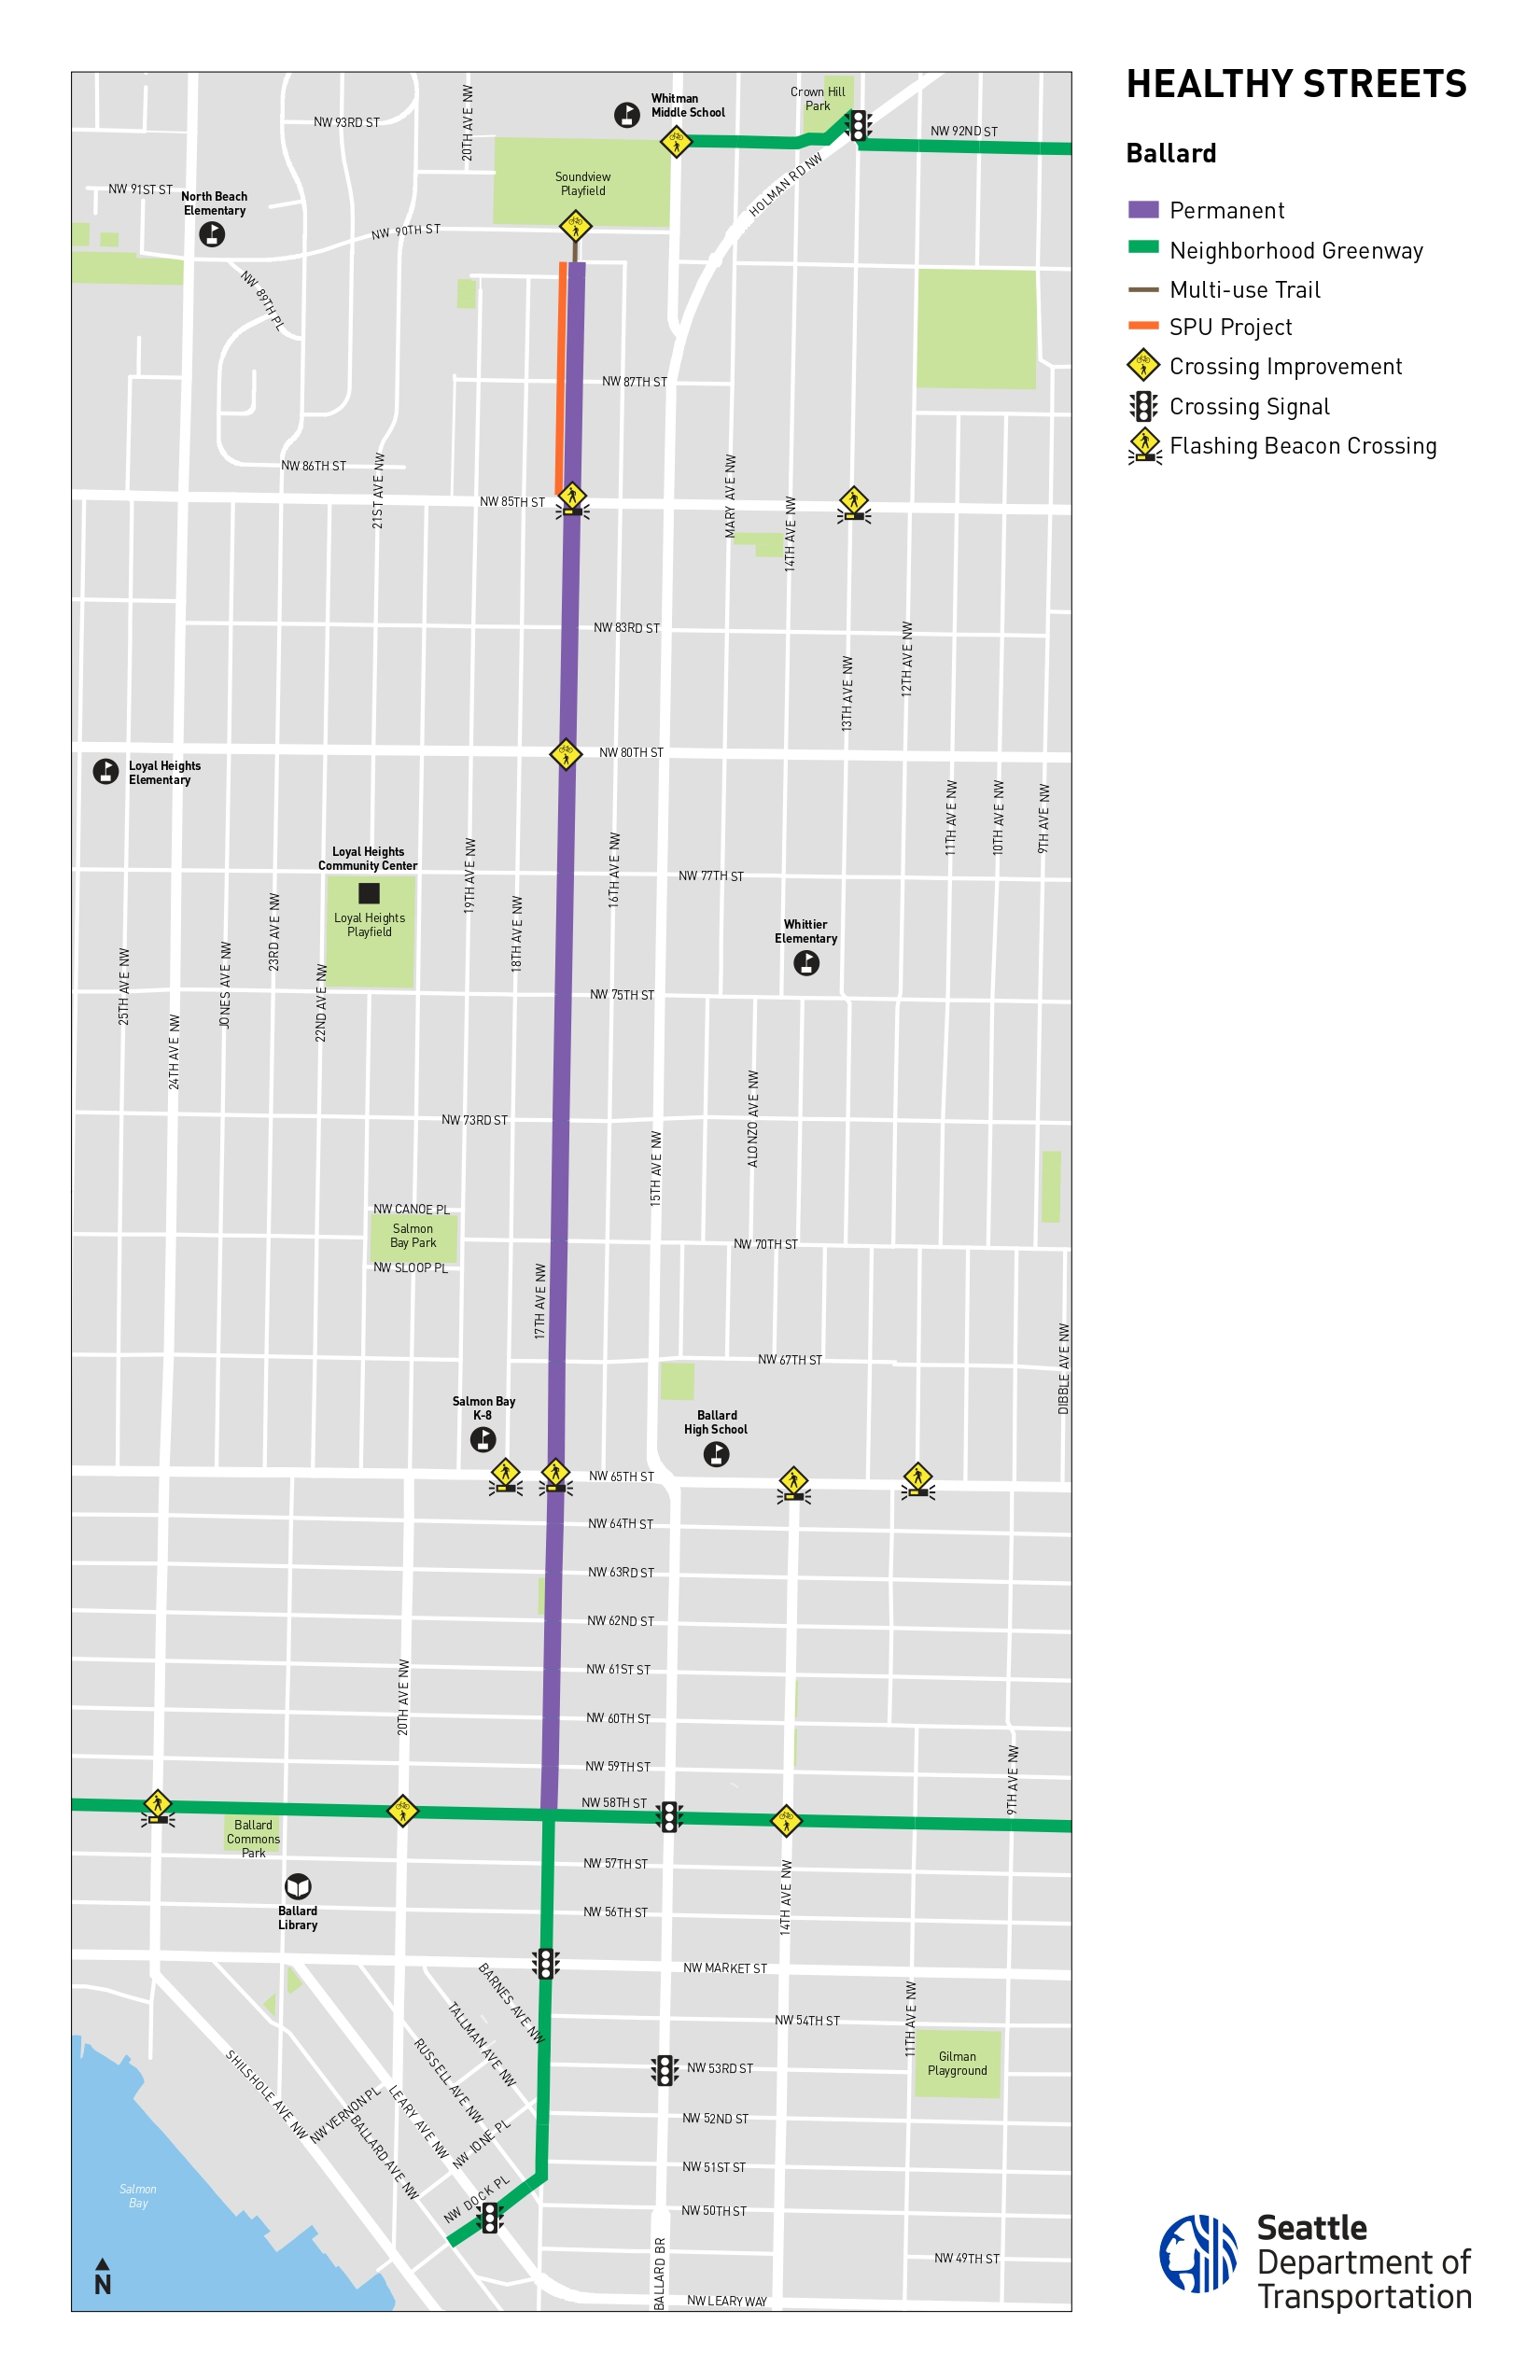 Ballard Healthy Street project map